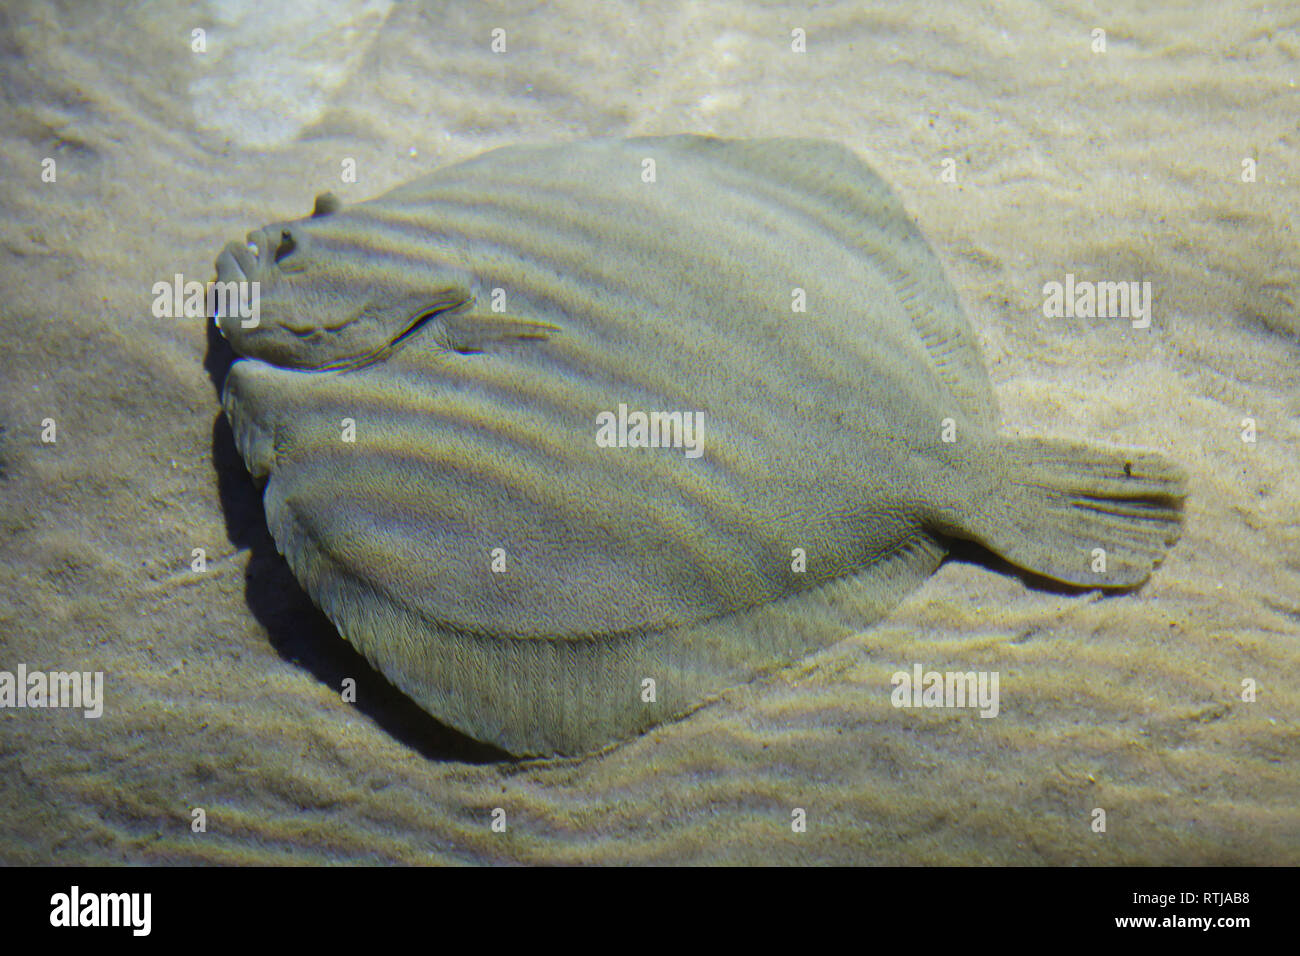 Rombo liscio (Scophthalmus rhombus). Marine pleuronettiformi. Foto Stock